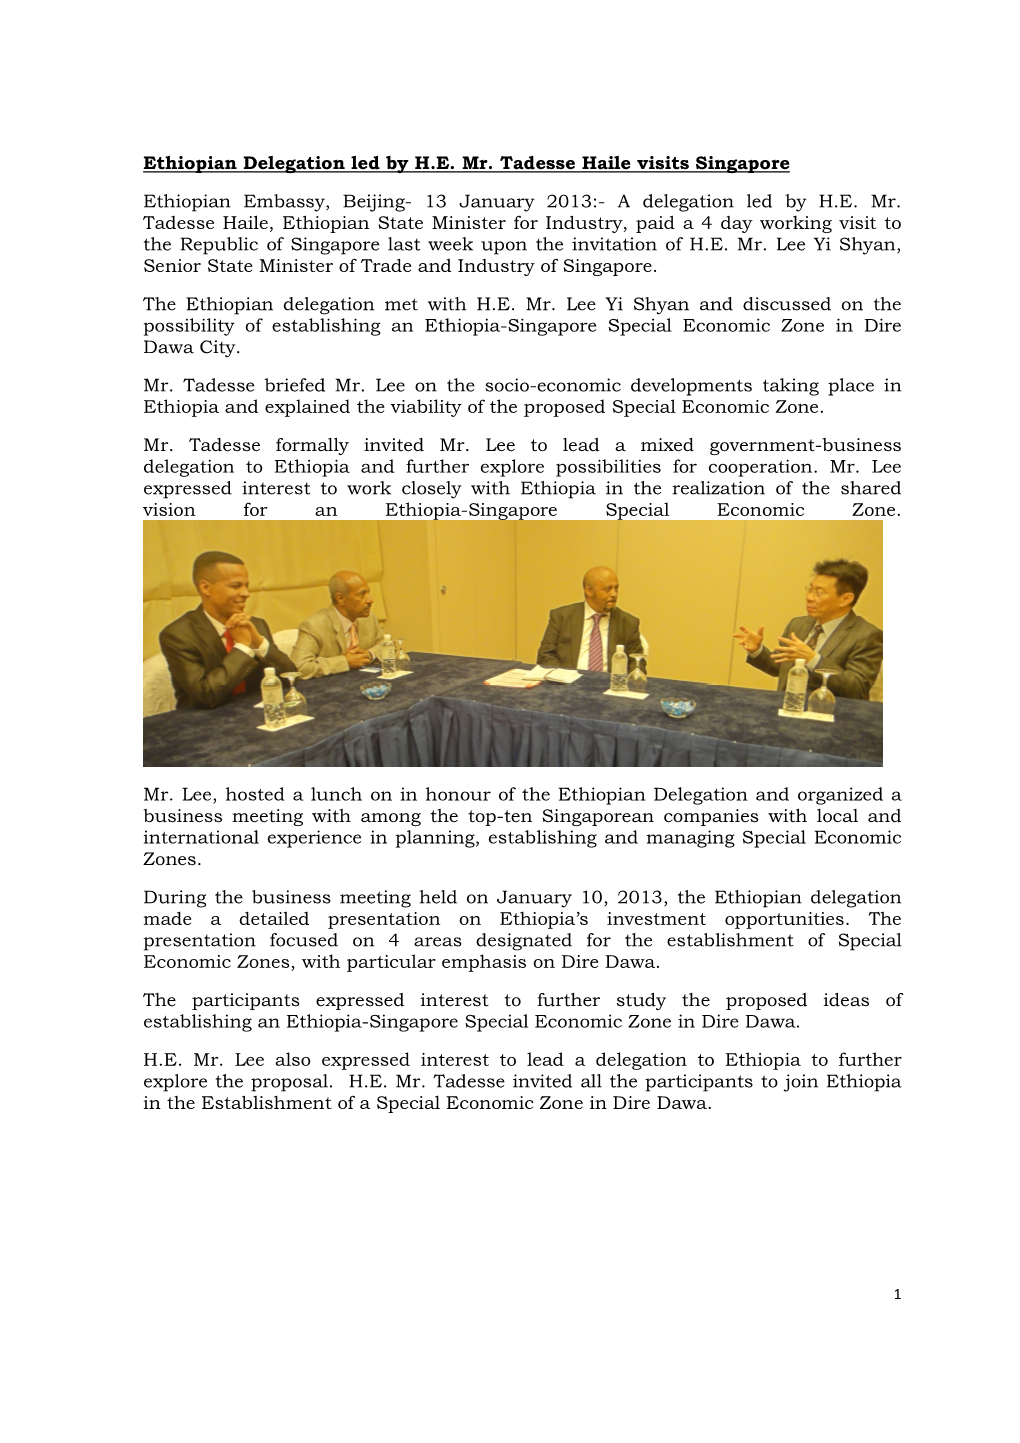 Ethiopian Delegation Led by HE Mr. Tadesse Haile Visits Singapore